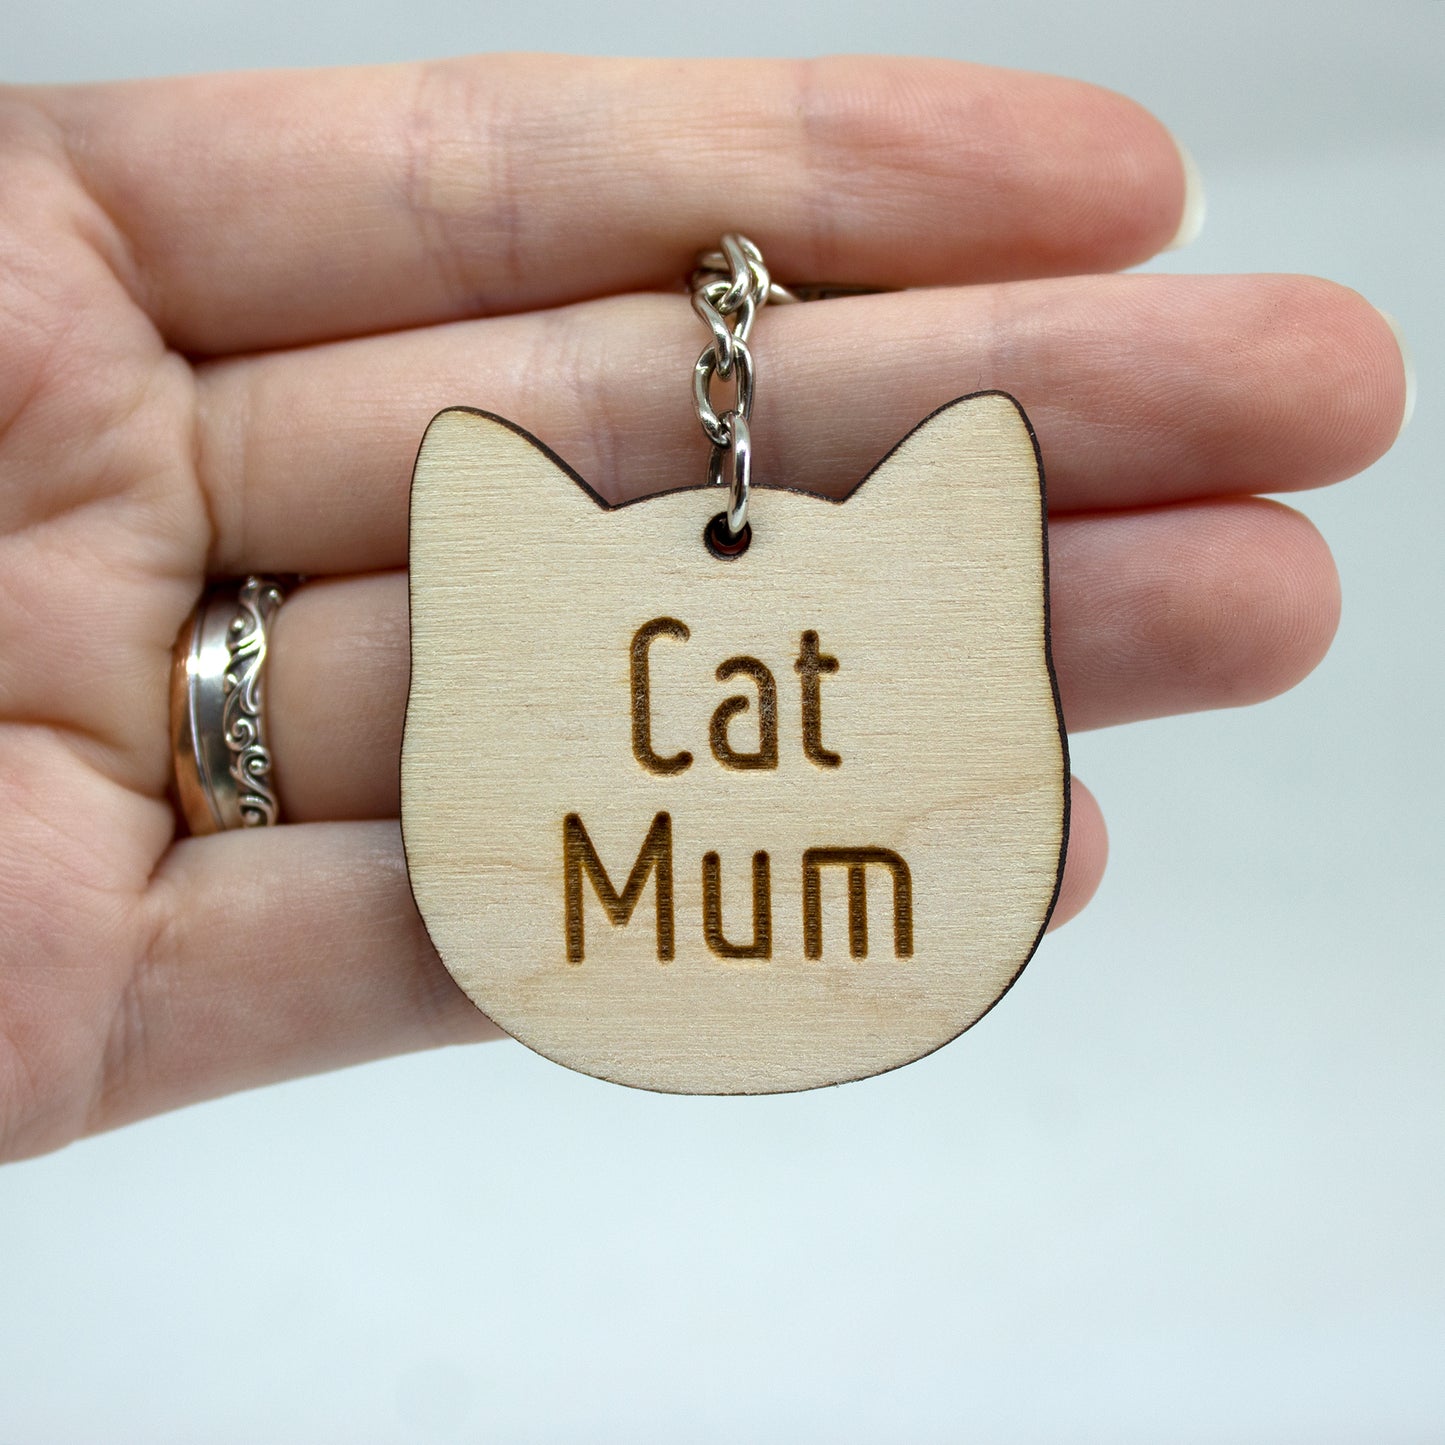 Cat Mum Keyring, Cat Owner Keychain, Crazy Cat Lady, From The Cat, Secret Santa